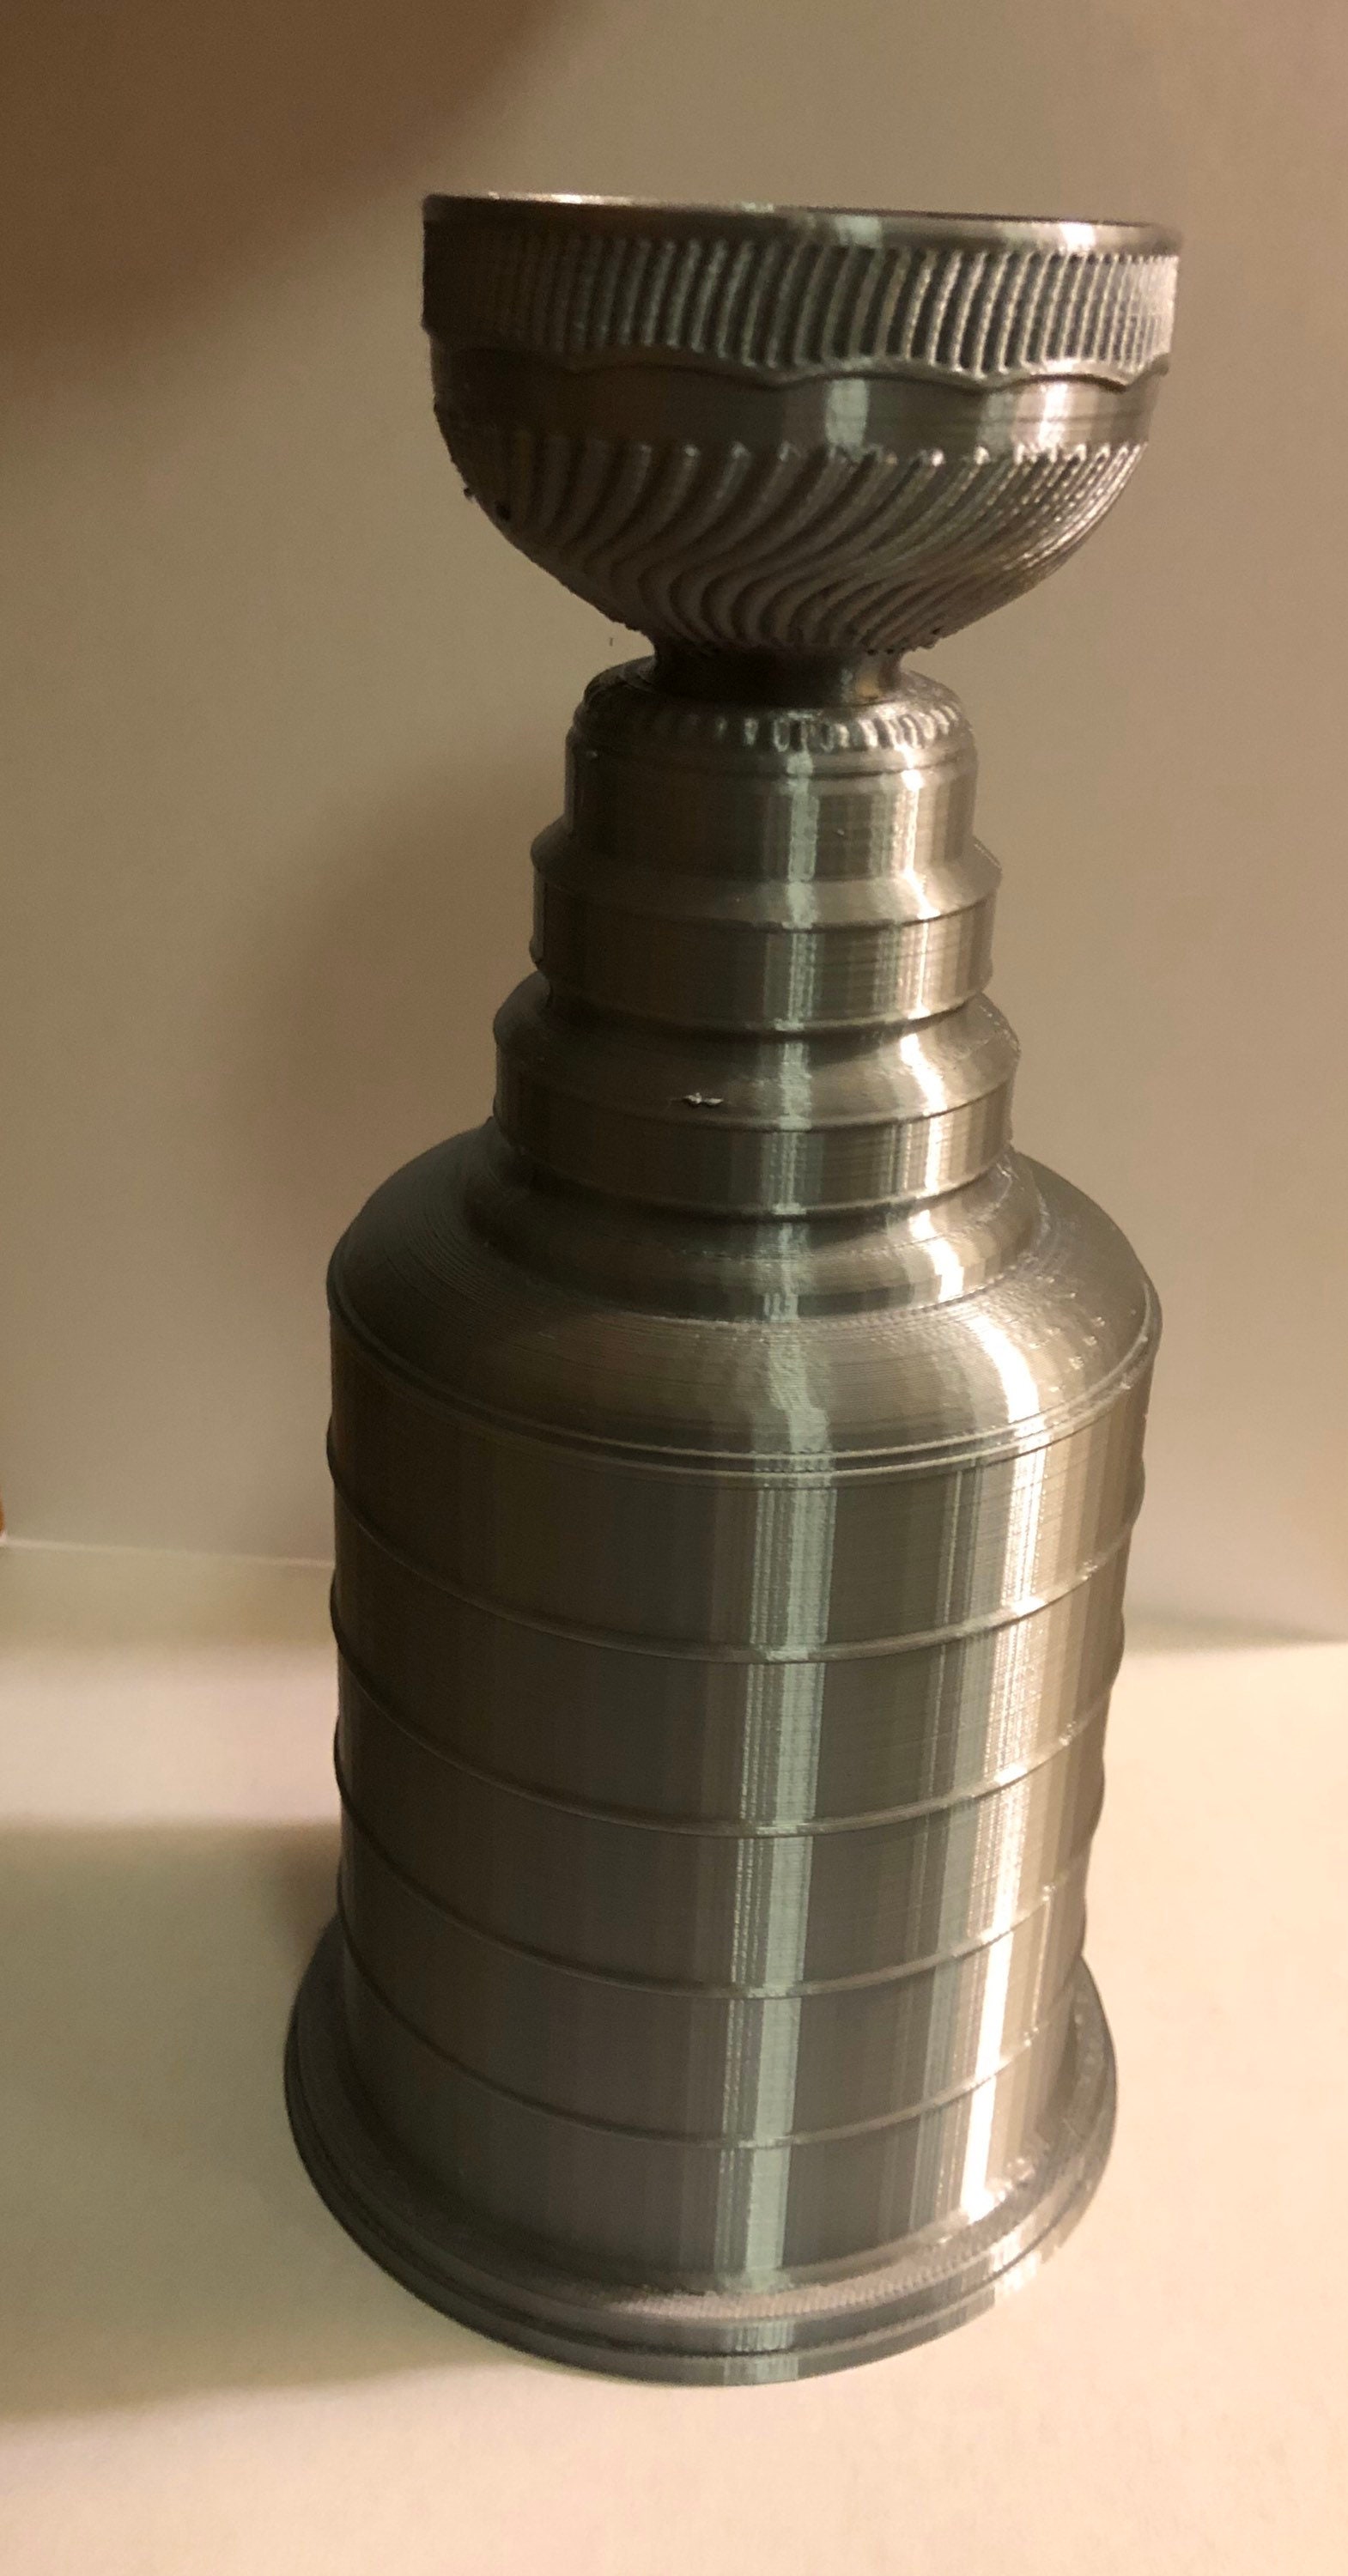 Custom Stanley cup made by me 💁🏼‍♀️🐆🖤 #customstanleycup #stanleycu